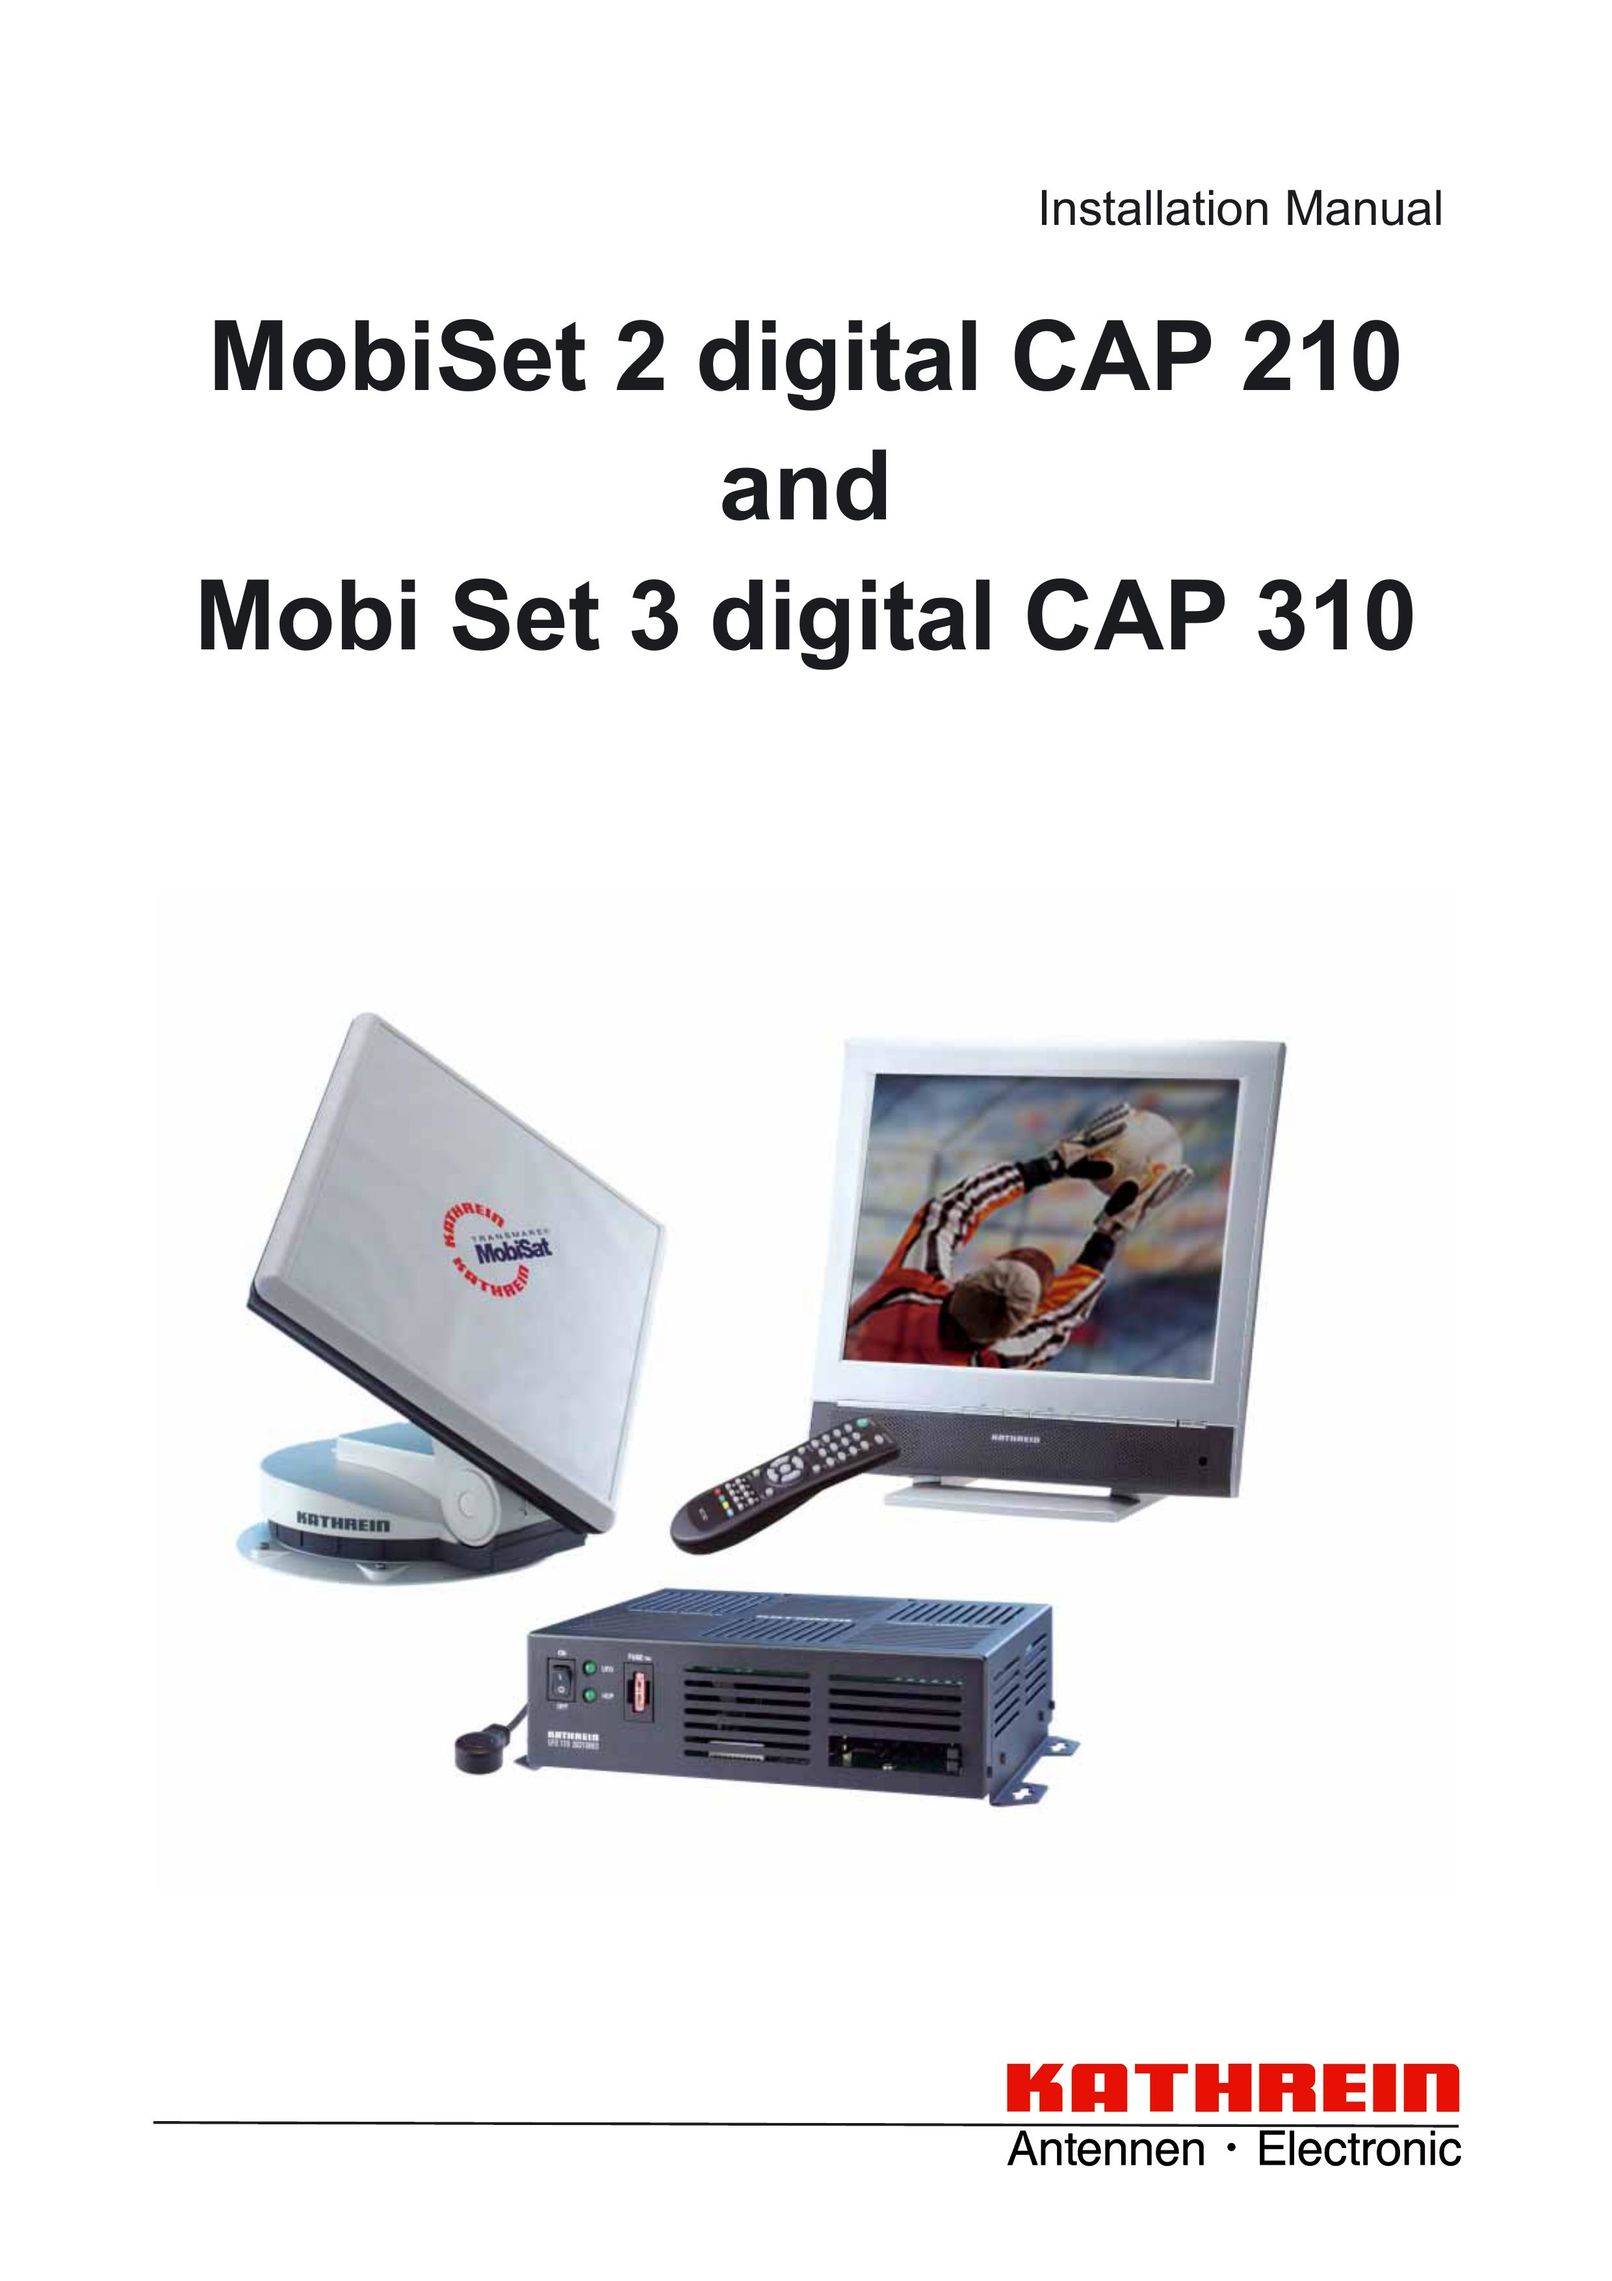 Kathrein MobiSet 2 CAP 210 Satellite TV System User Manual